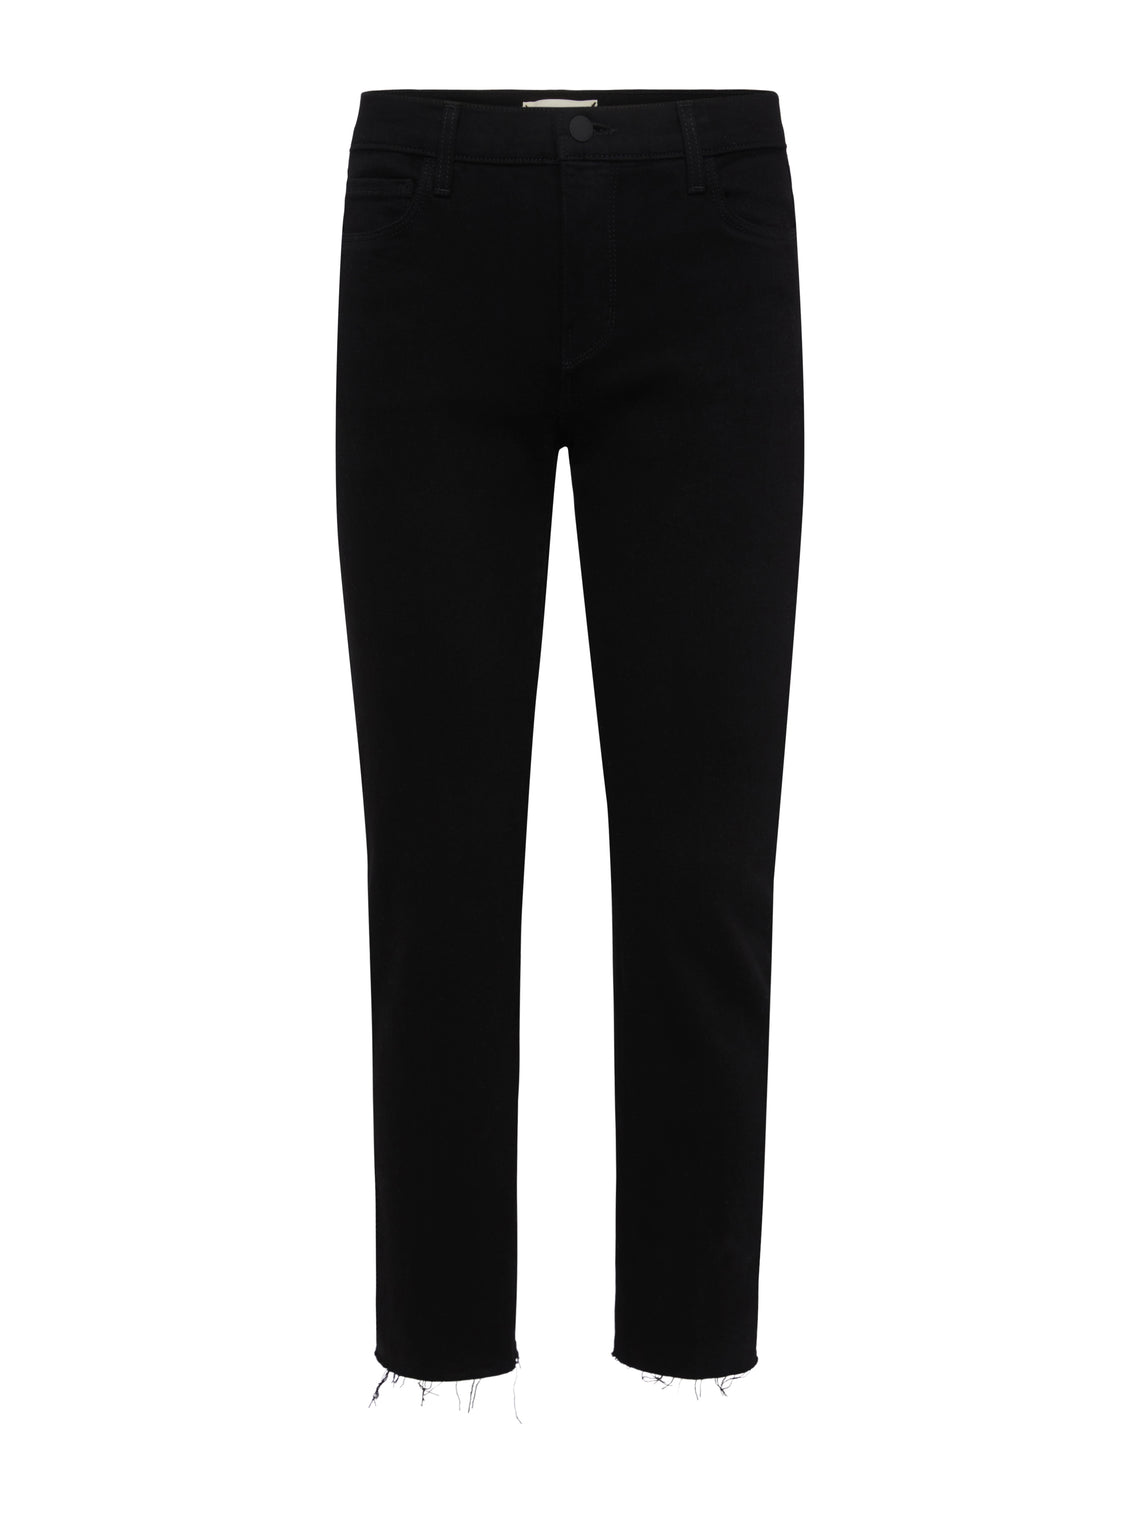 L'AGENCE Sada High-Rise Slim-Leg Cropped Jean In Black